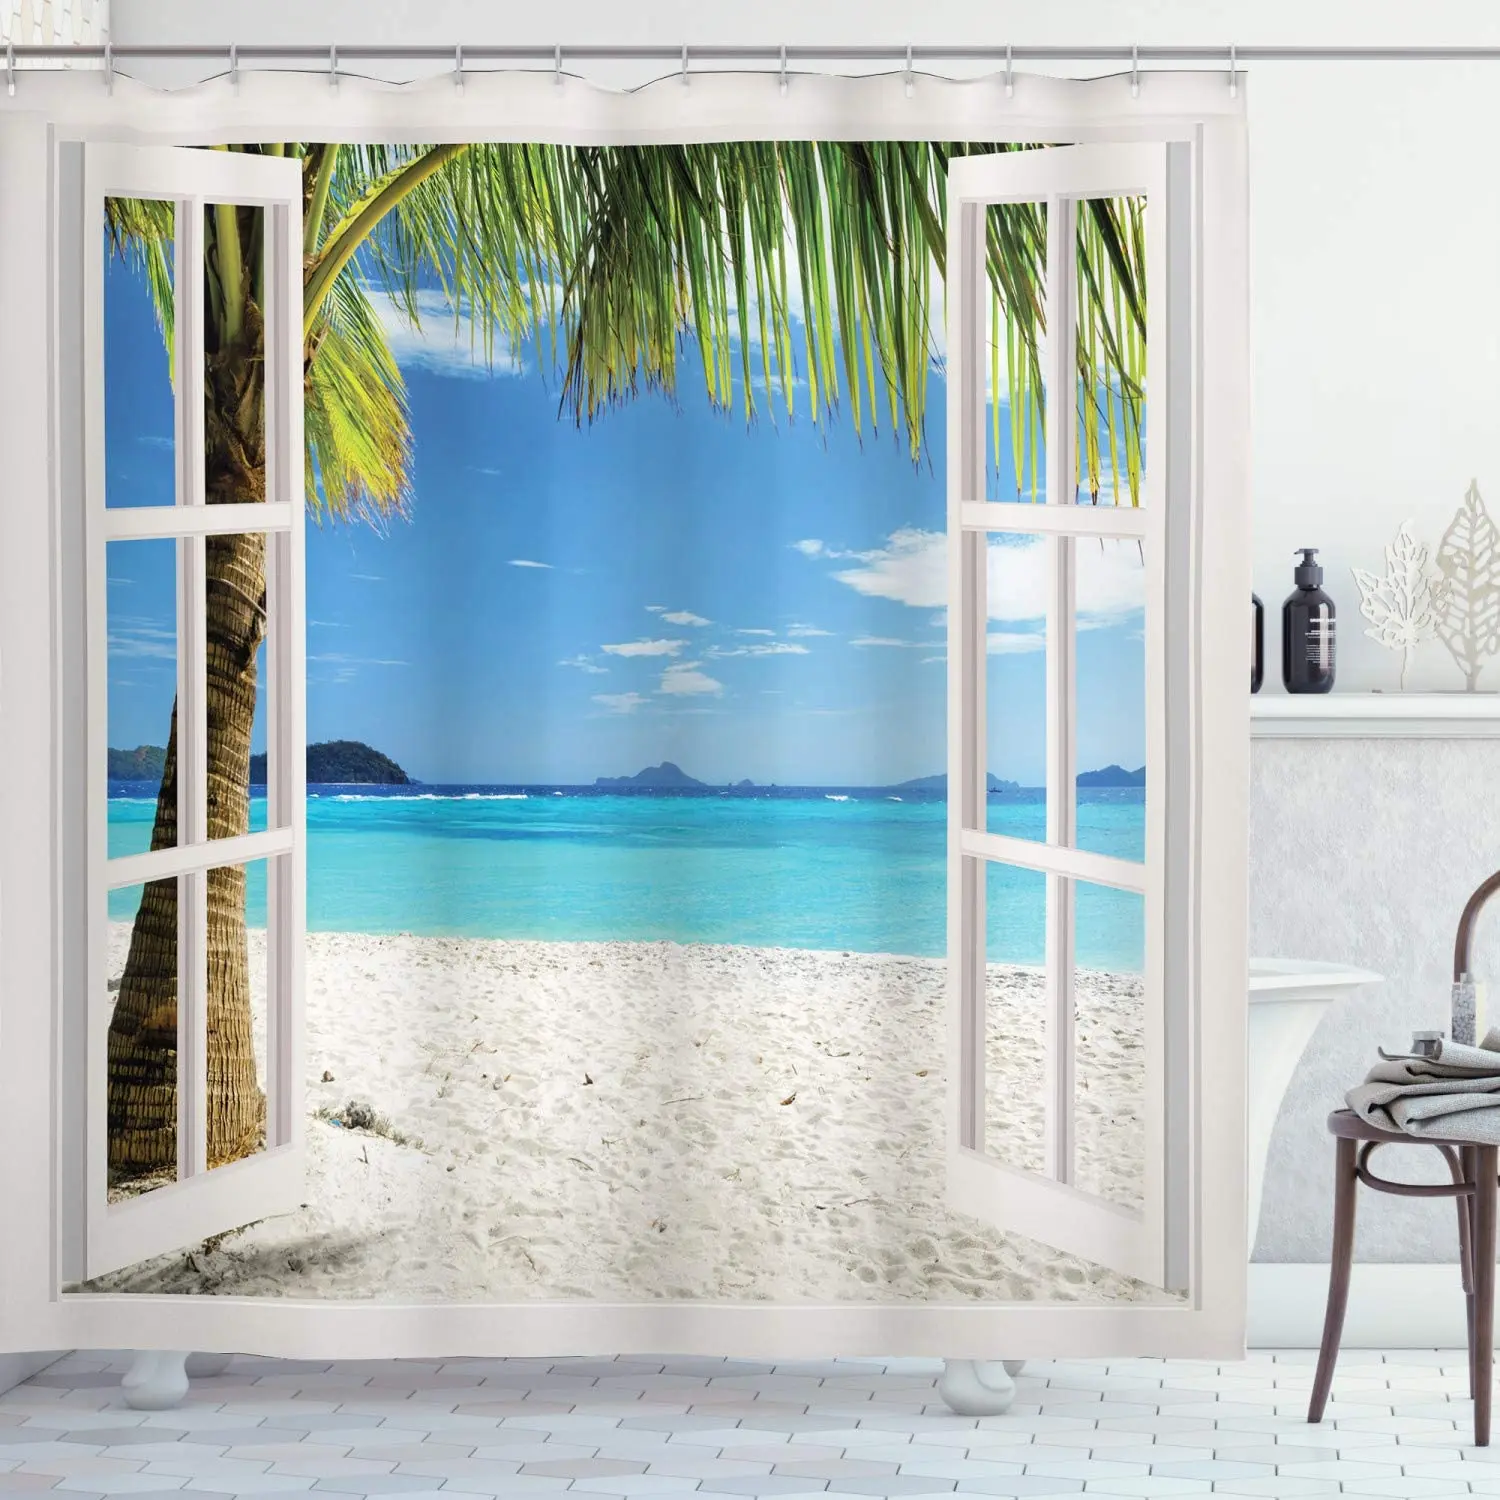 

Turquoise Shower Curtain, Tropical Palm Trees on Island Ocean Beach Through White Wooden Windows, Cloth Fabric Bathroo